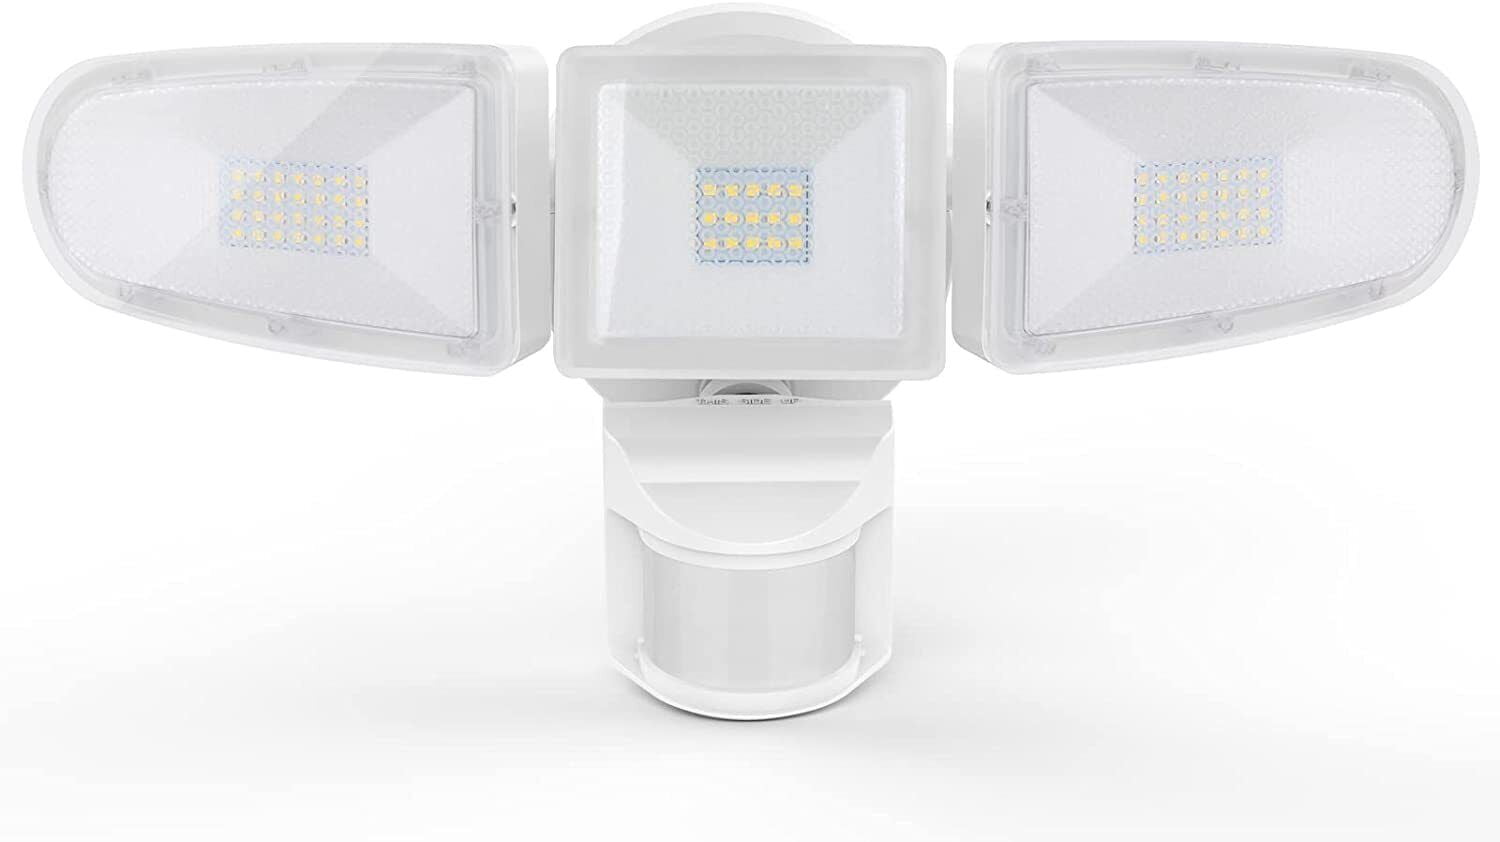 K KASONIC 2 Pack LED Security Lights Motion Sensor Light Outdoor,2500LM  Motion Security Light with Remote, IP65 Waterproof, 3 Head Motion Detected  Light for Garage, Porch, Yard, ETL Certified,Daylight 